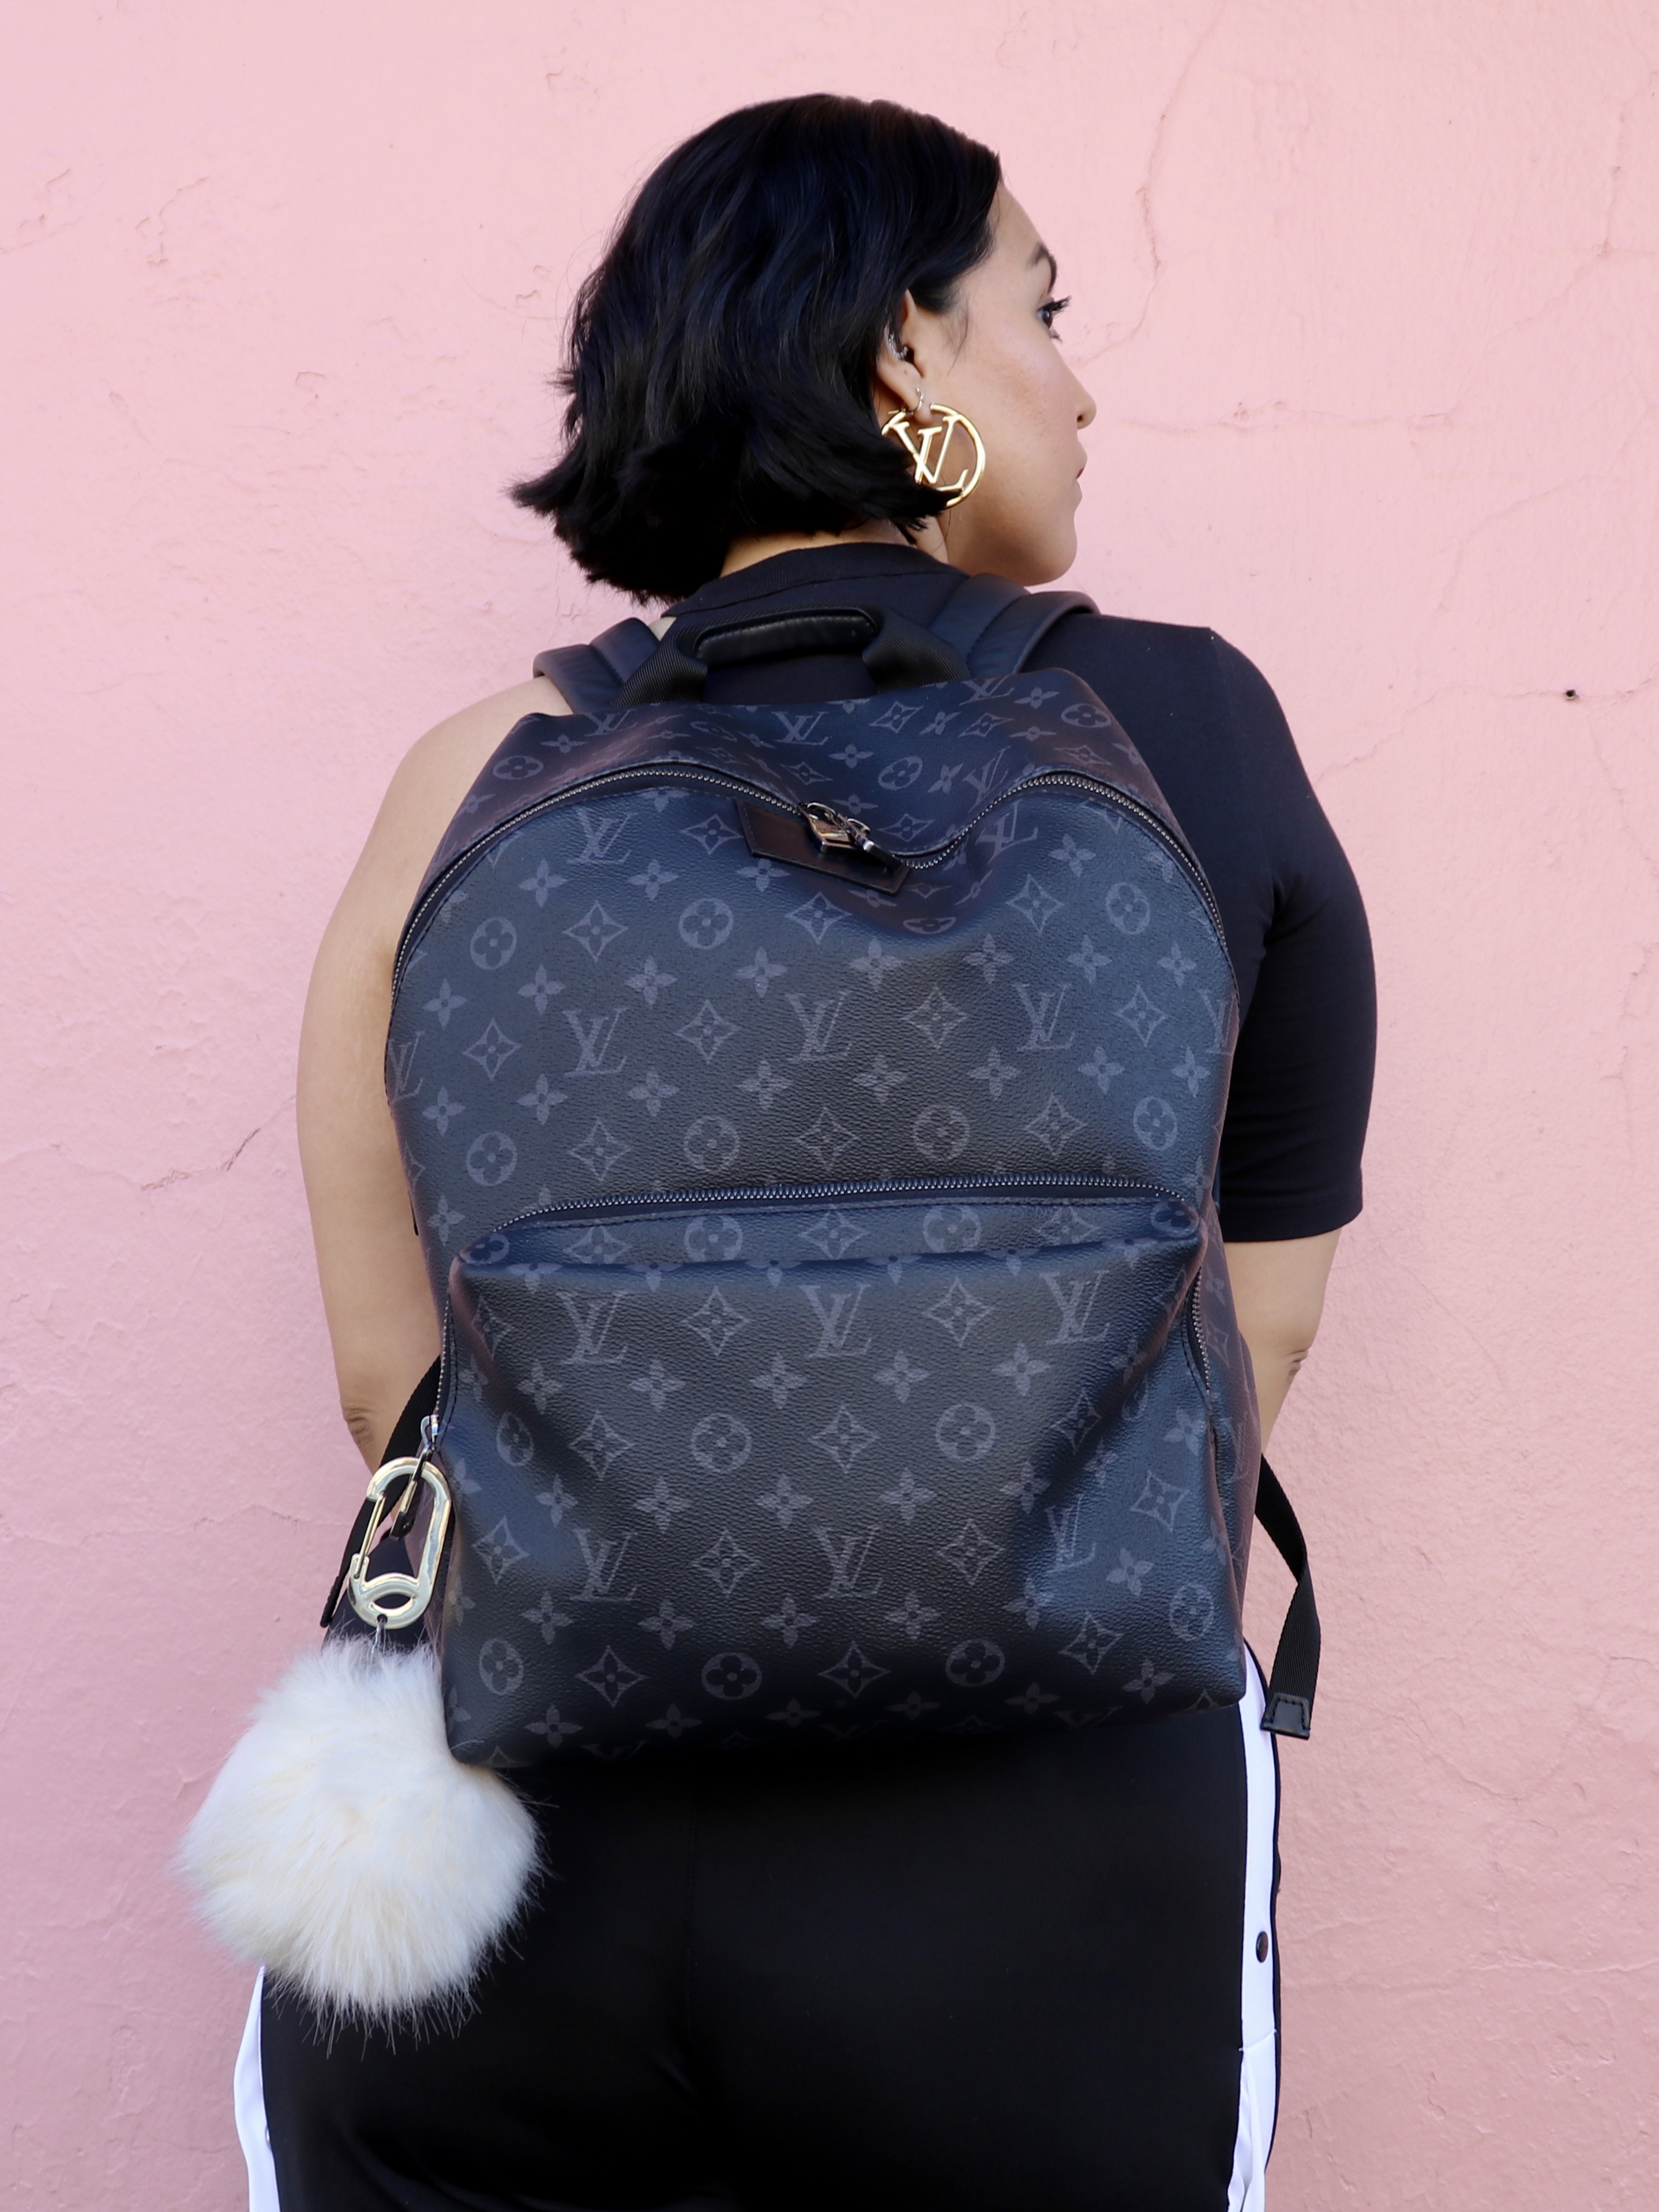 Fashionphile - The Hermes Kelly Ado Backpack has the same